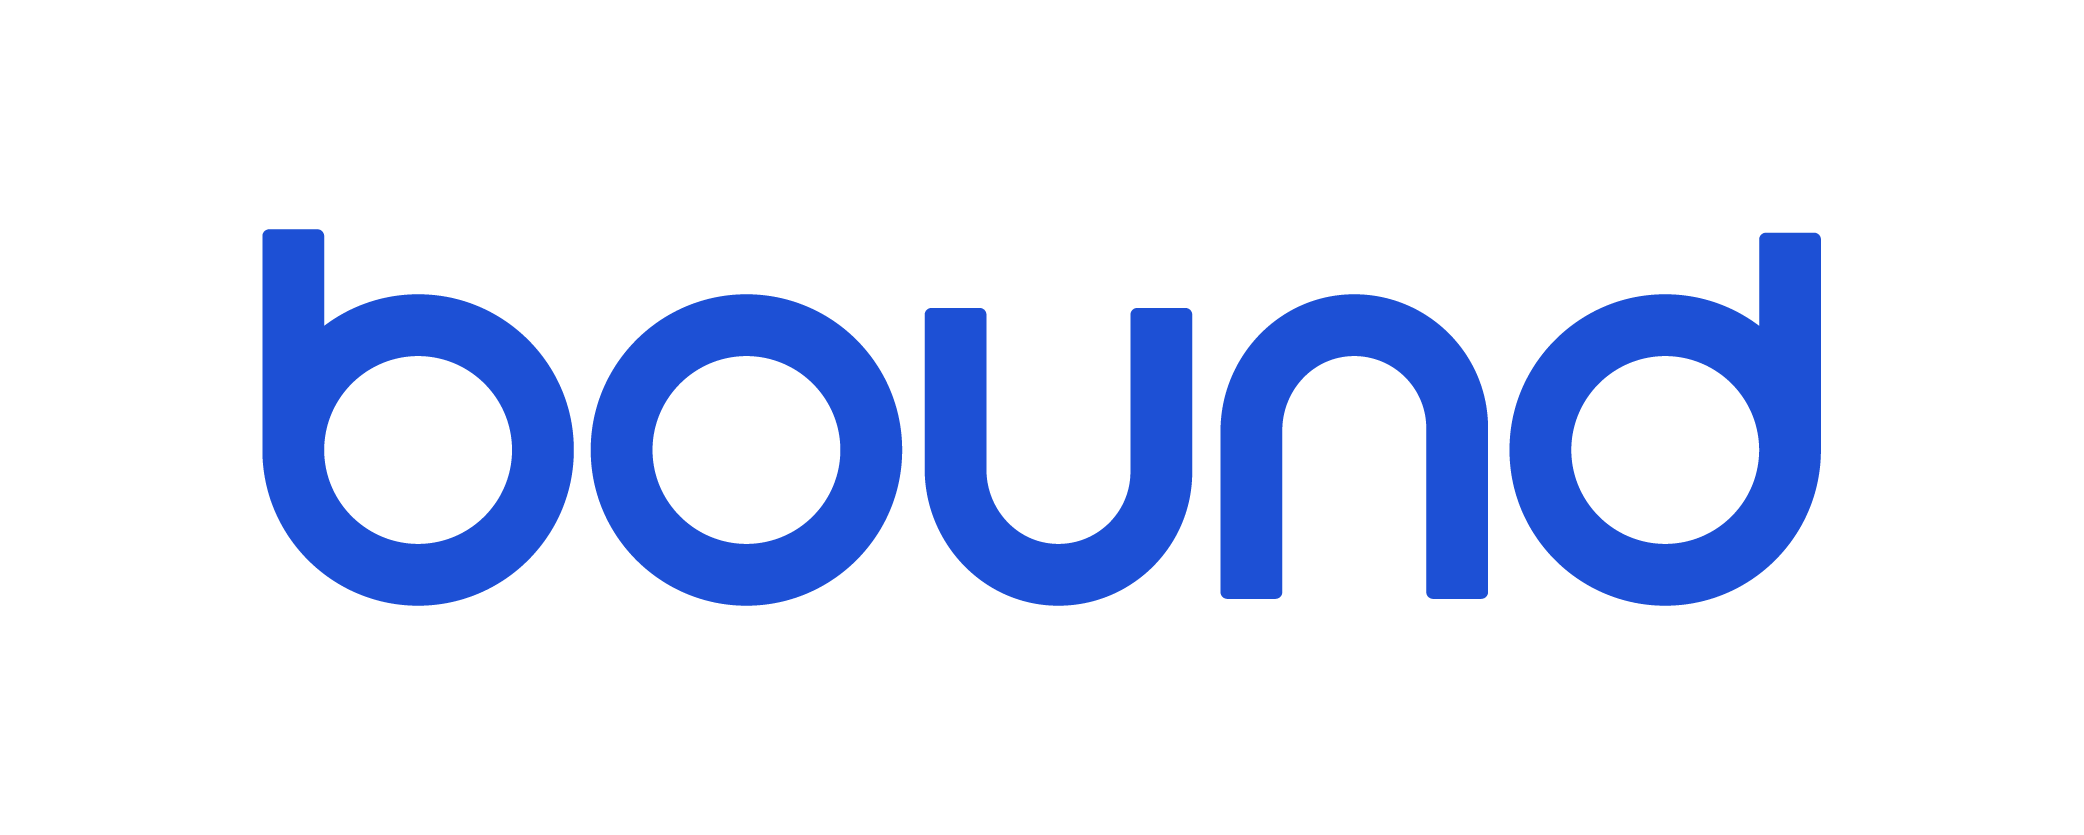 bound logo